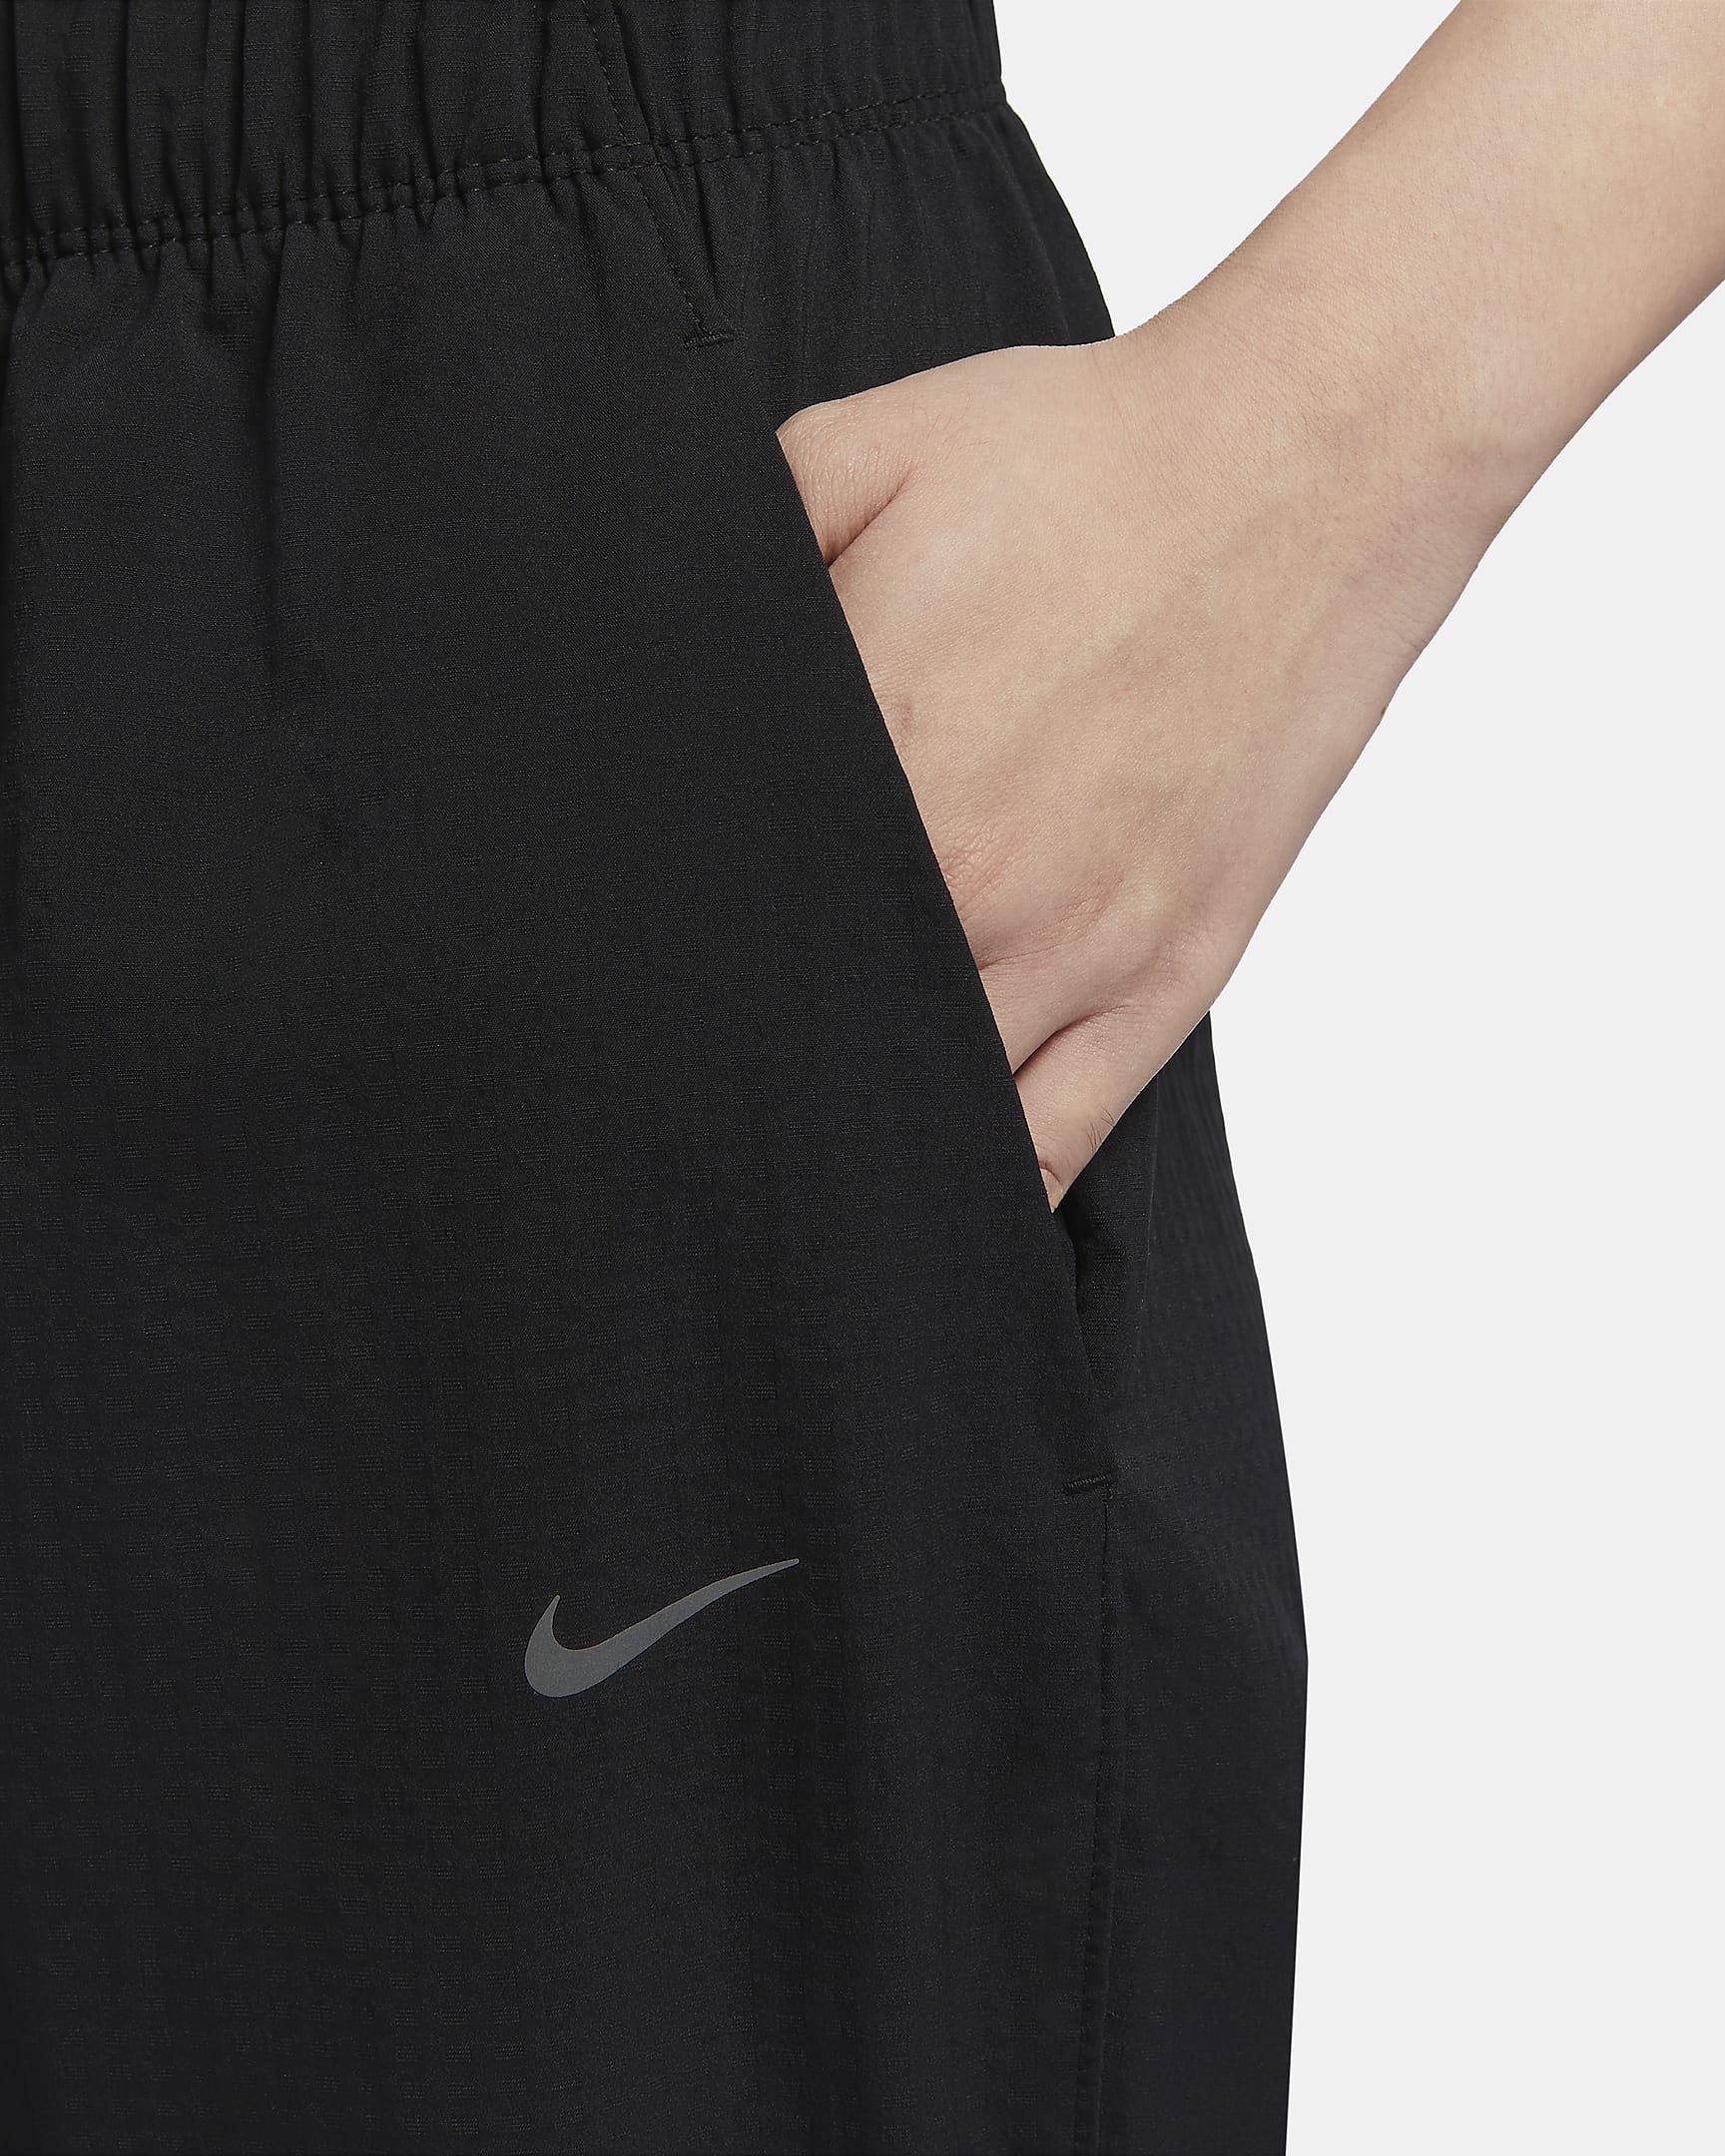 Nike Dri-FIT Fast Women's Mid-Rise 7/8 Warm-Up Running Pants. Nike JP